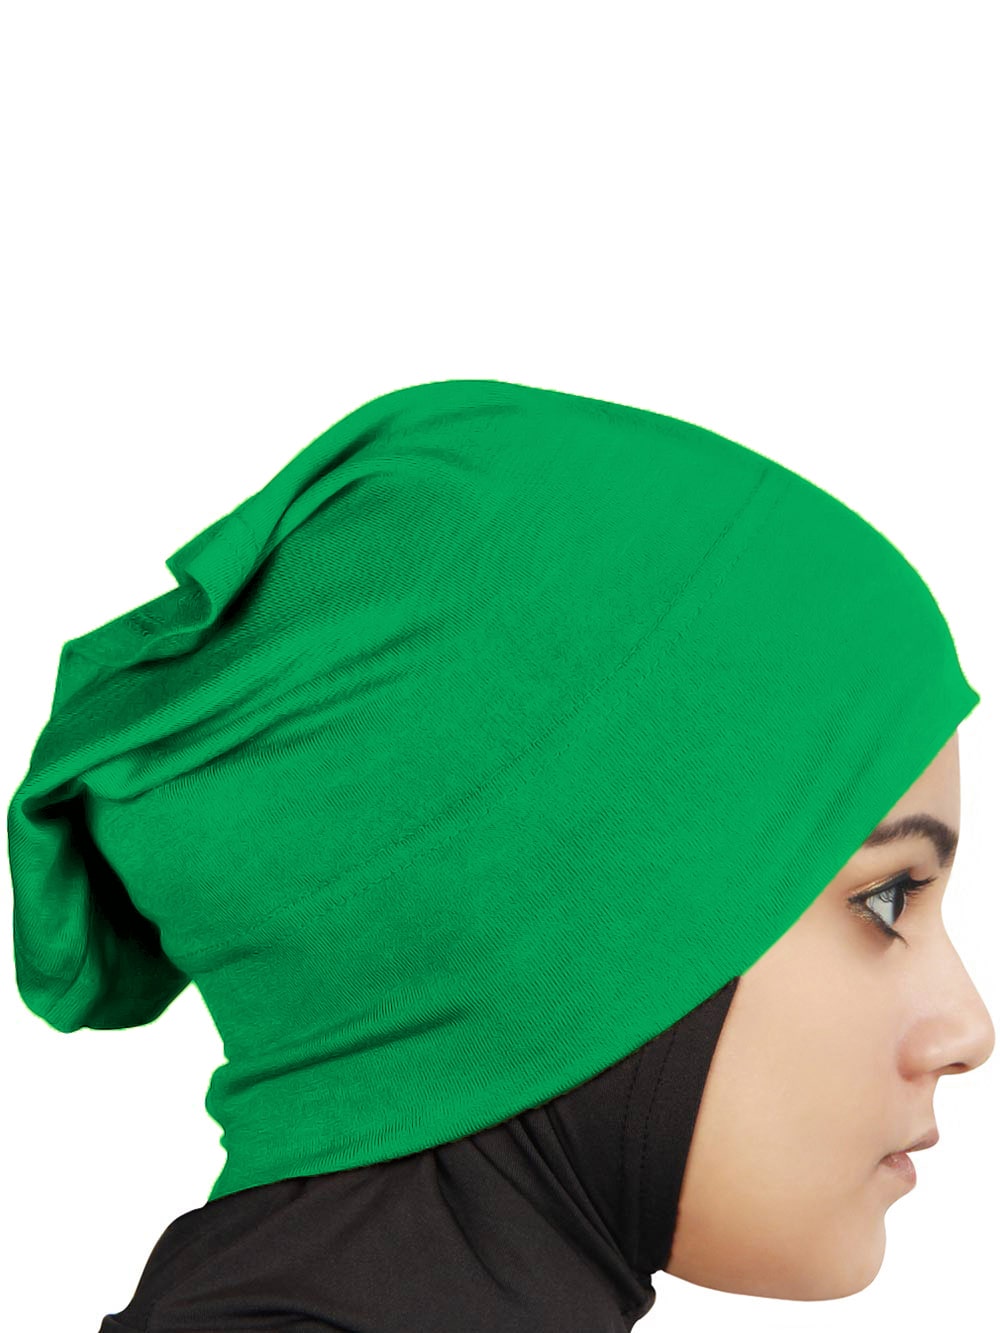 Two Piece Al-Amira Emerald Viscose Jersey Hijab